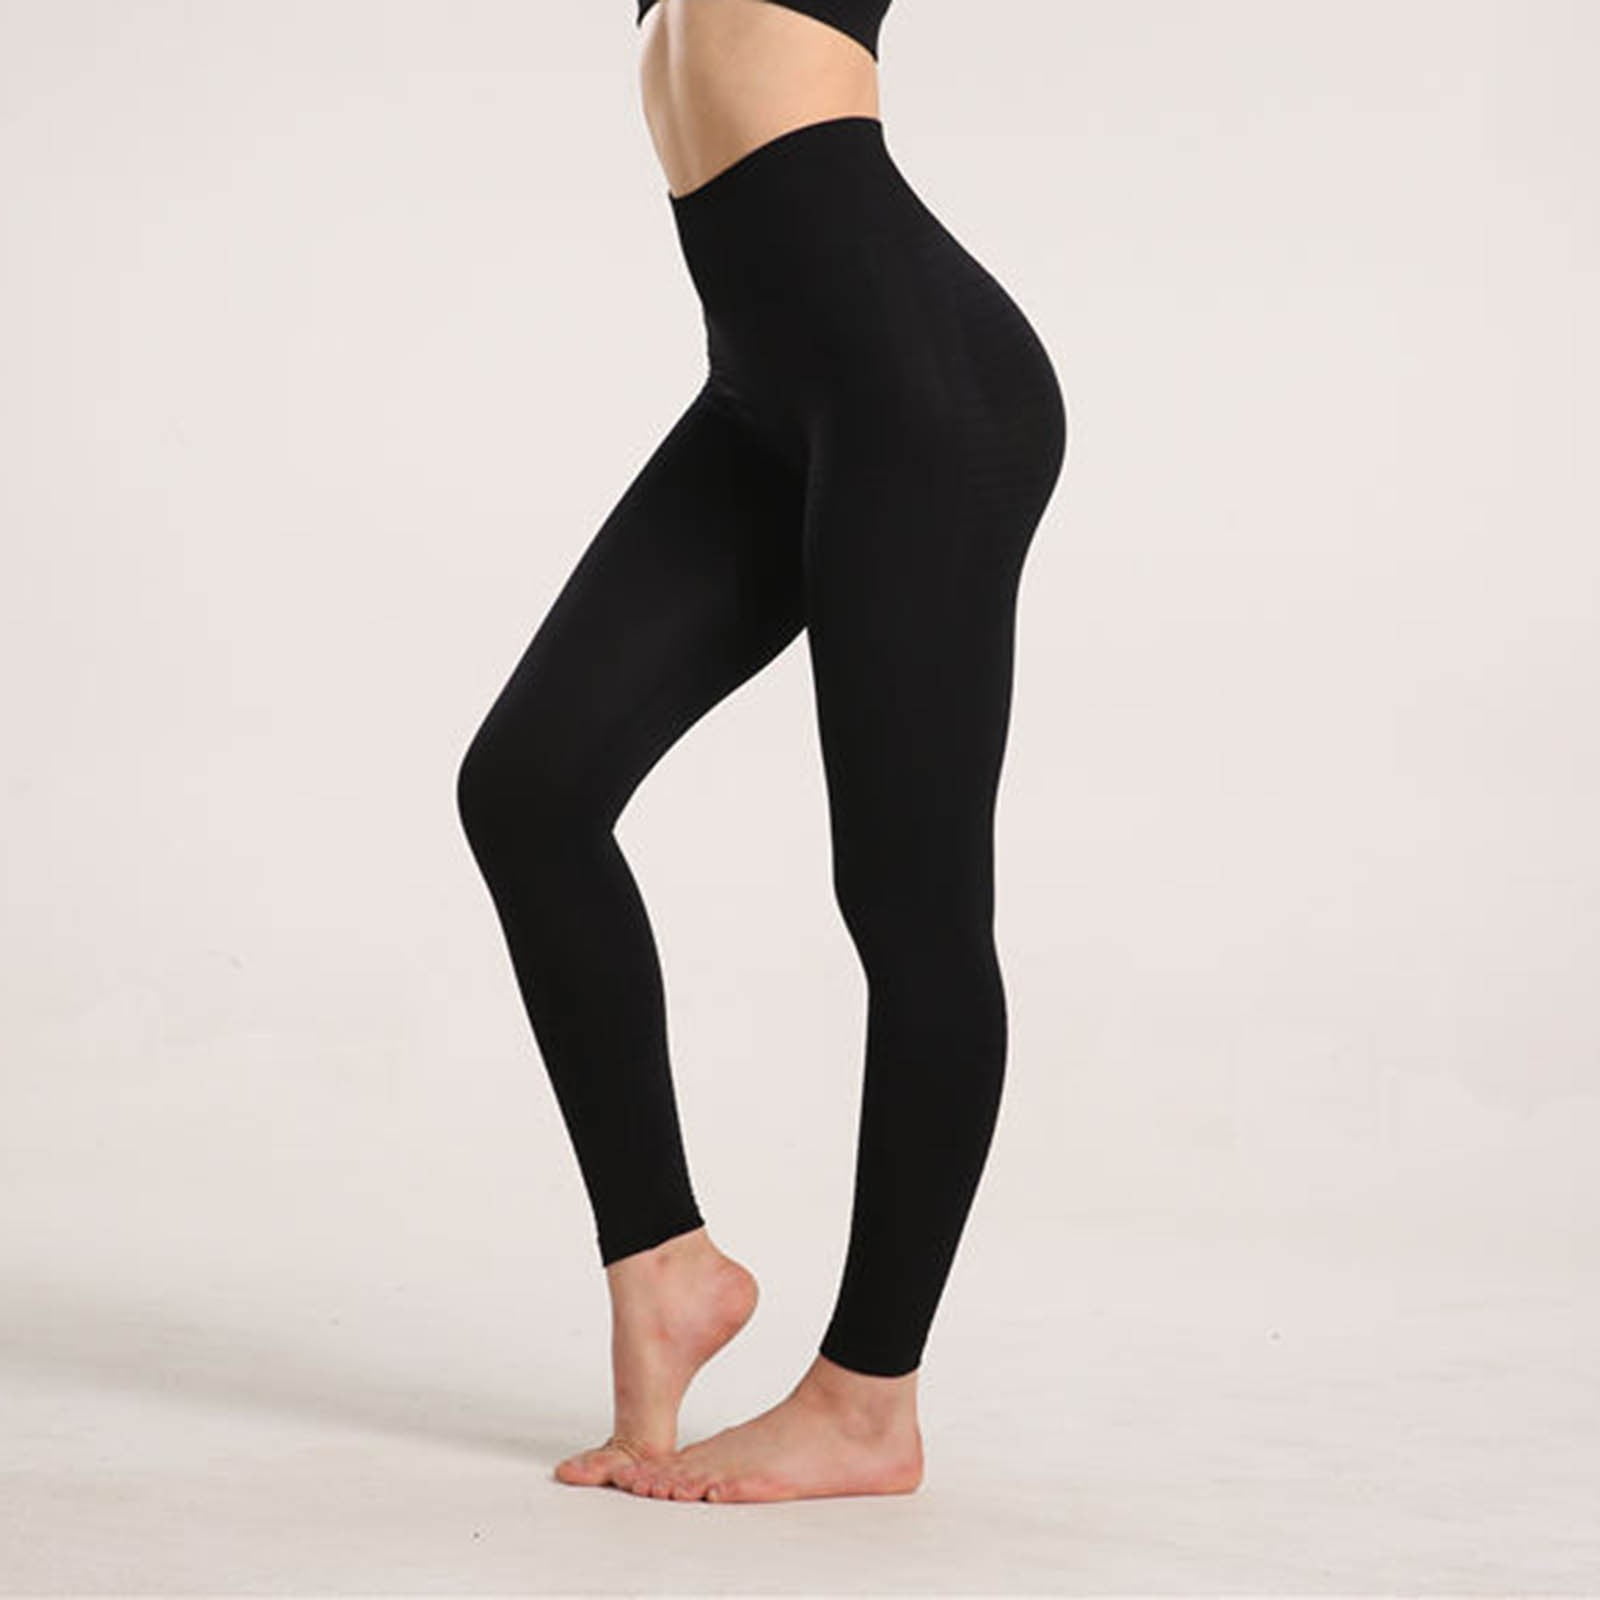 Gubotare Yoga Pants Women's Plus Size Stretch Cotton Fold Over